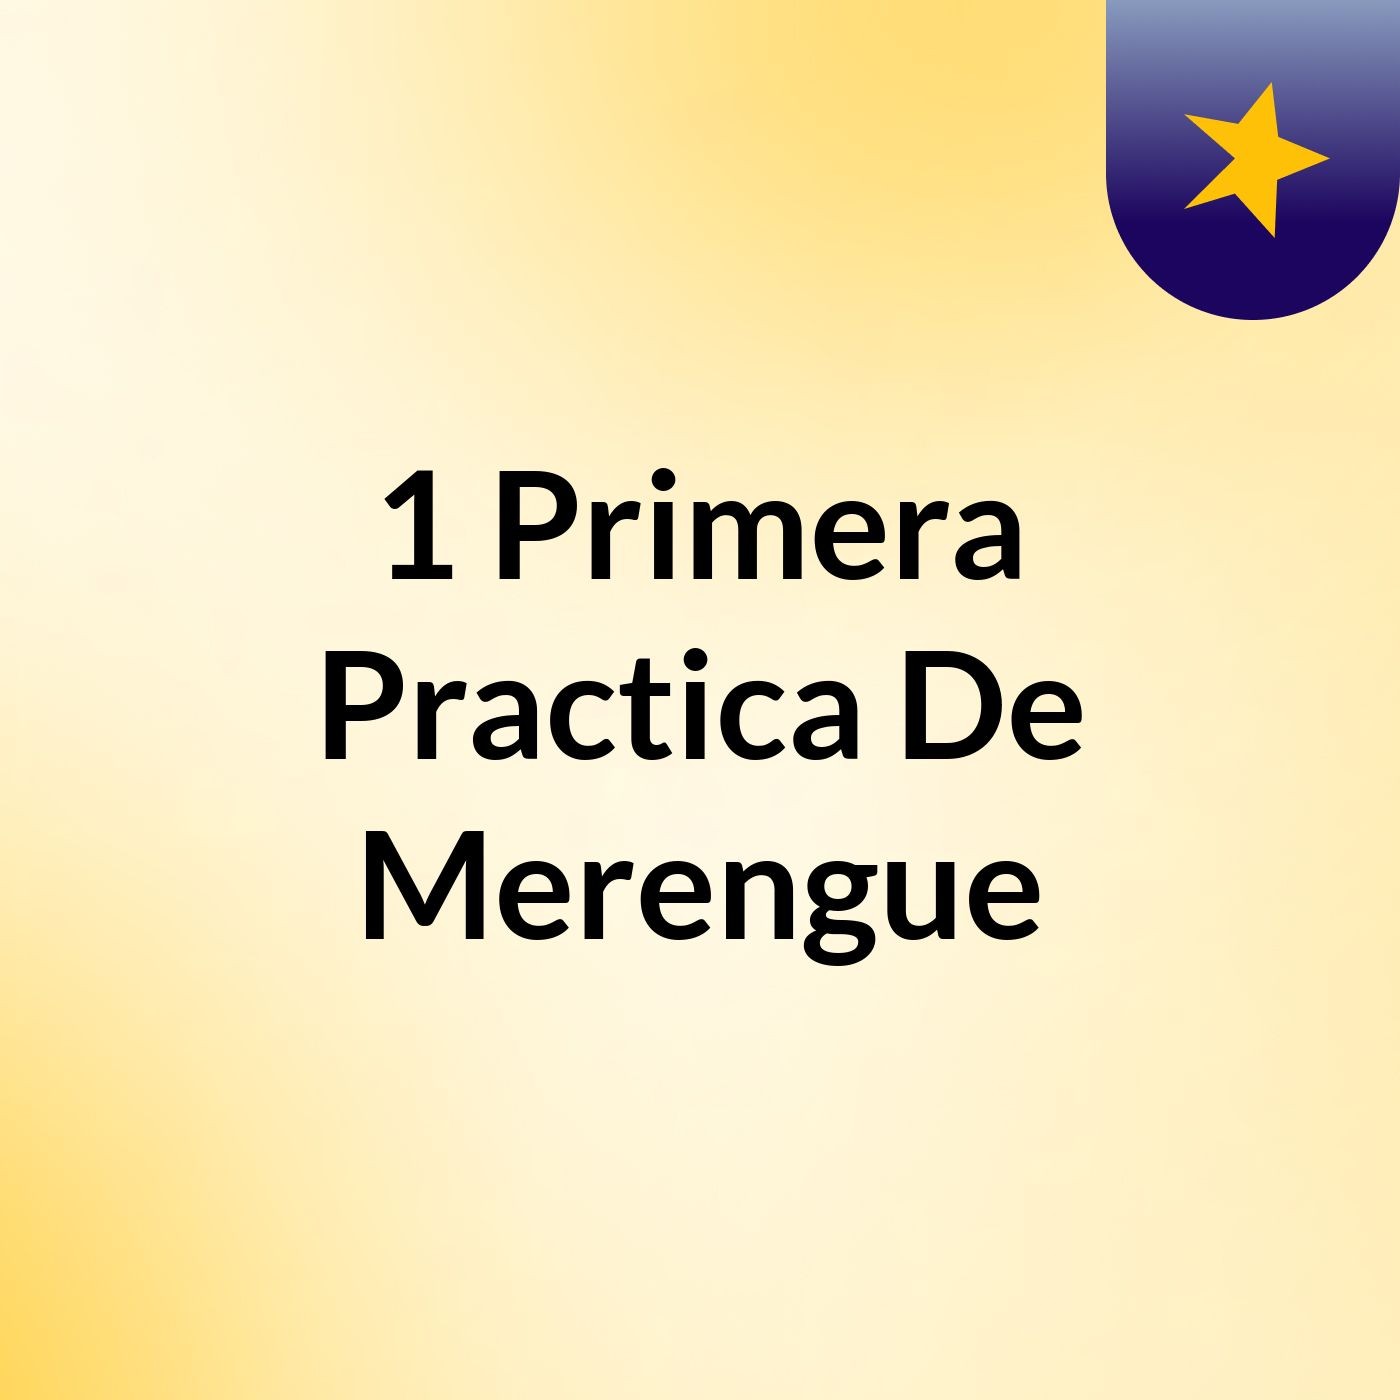 1 Primera Practica De Merengue